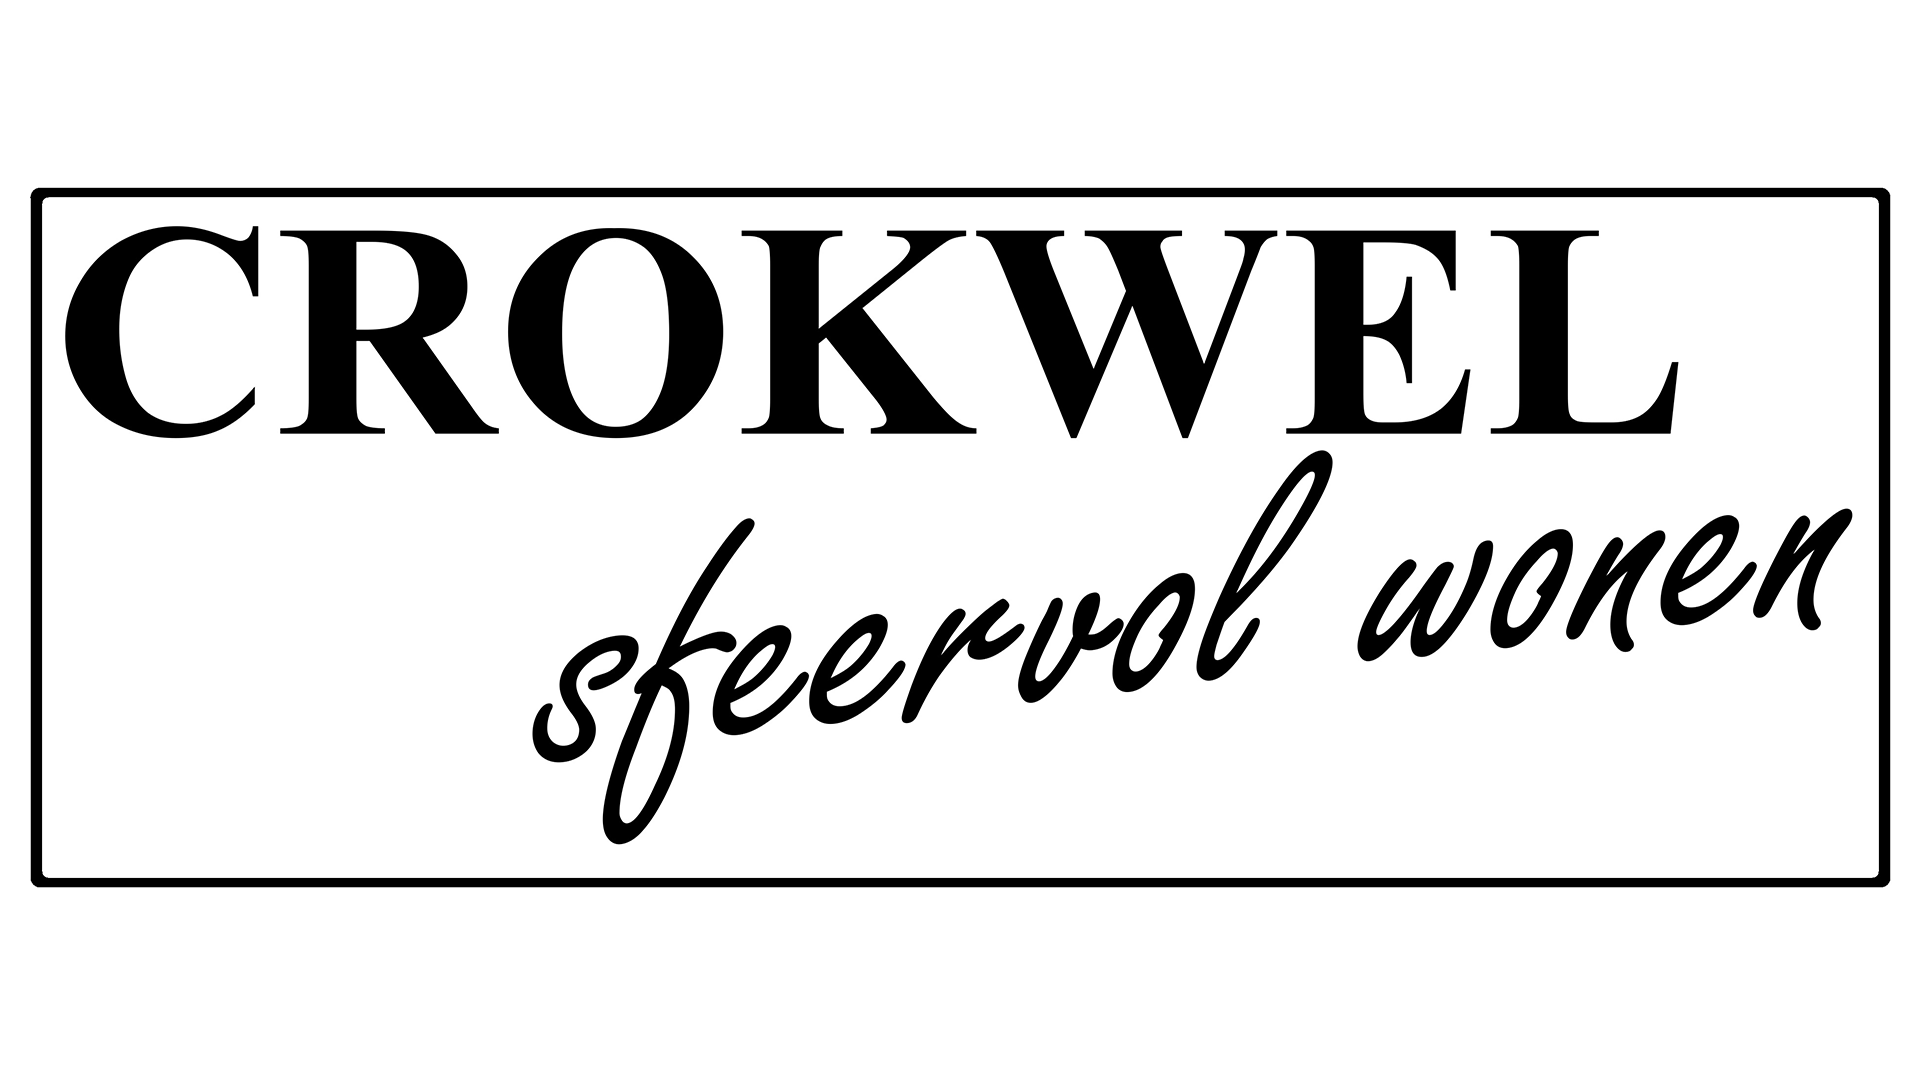 Crokwel